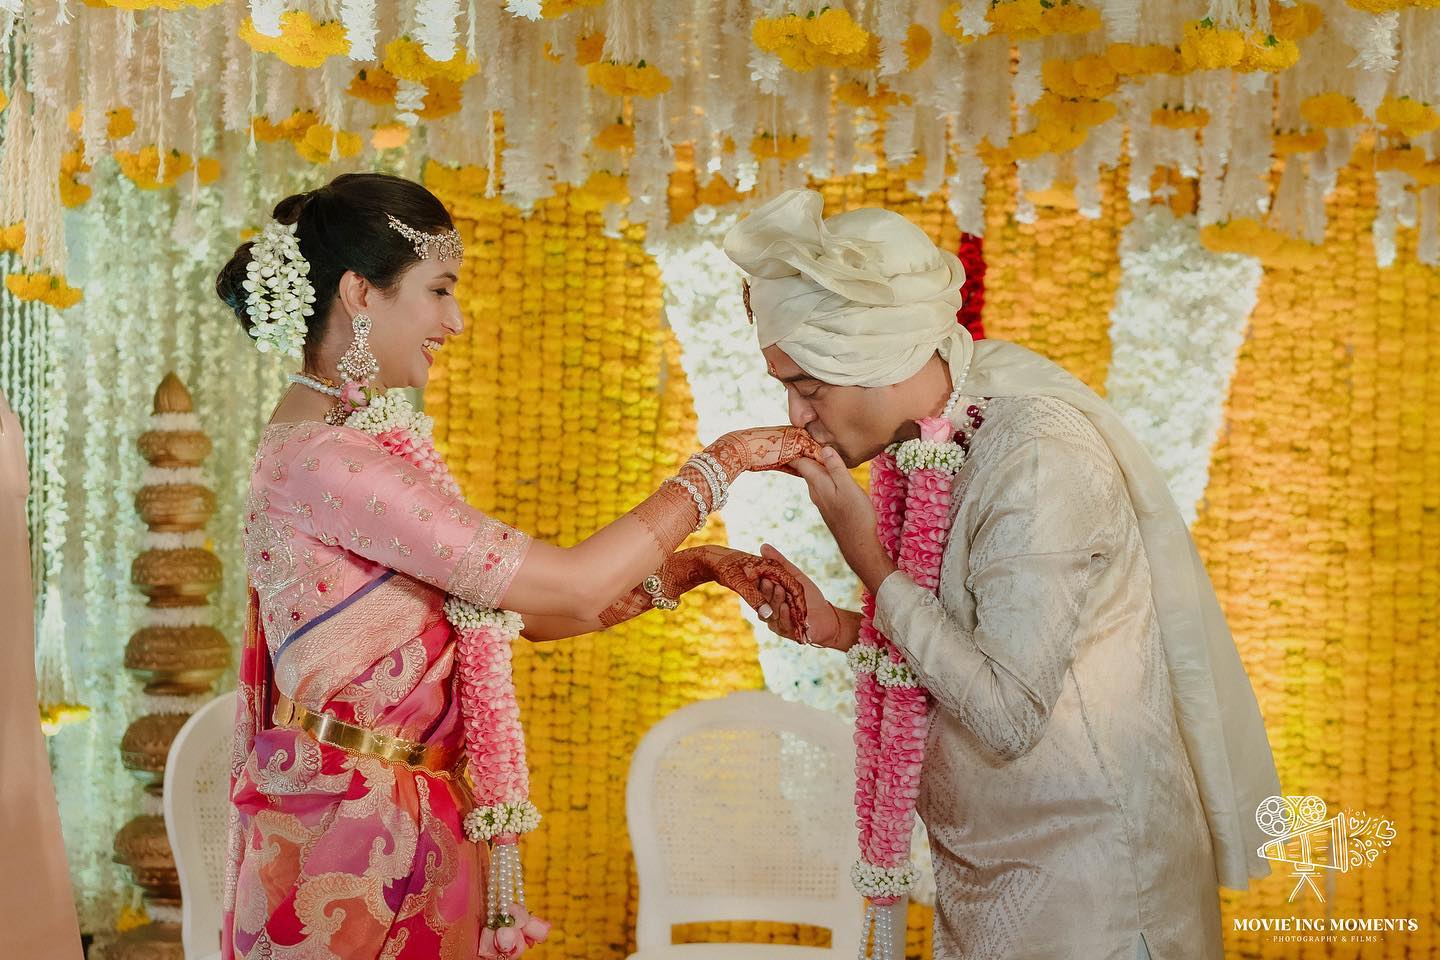 Producer Madhu Mantena Married Ira Trivedi In An Intimate Wedding